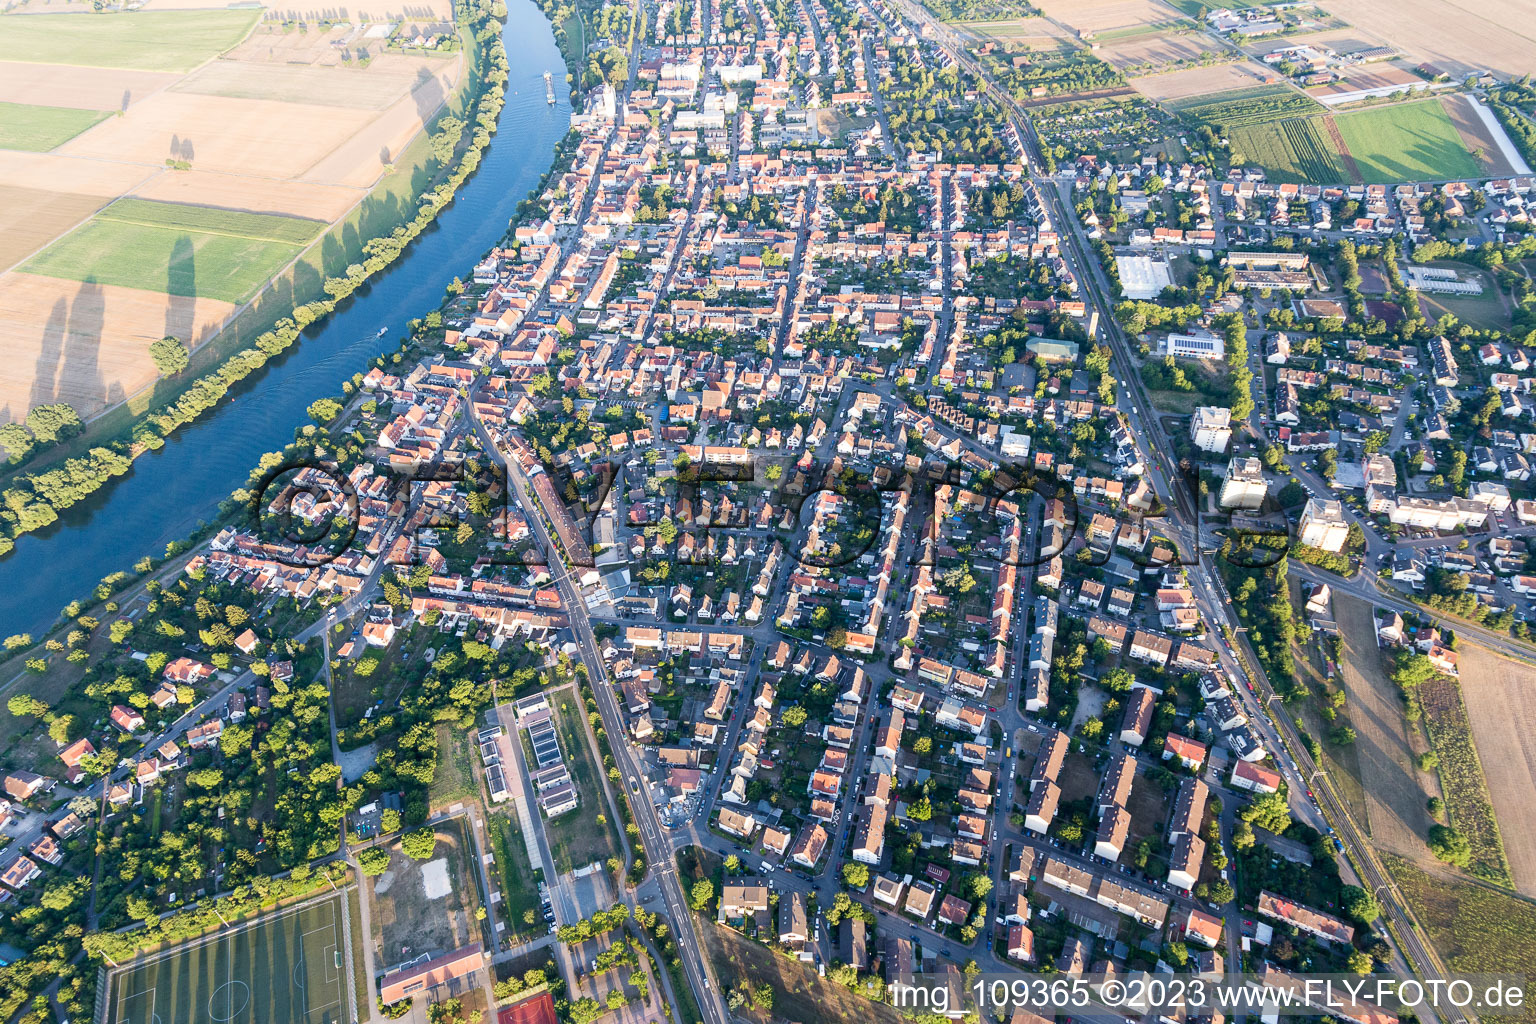 District Edingen in Edingen-Neckarhausen in the state Baden-Wuerttemberg, Germany from above